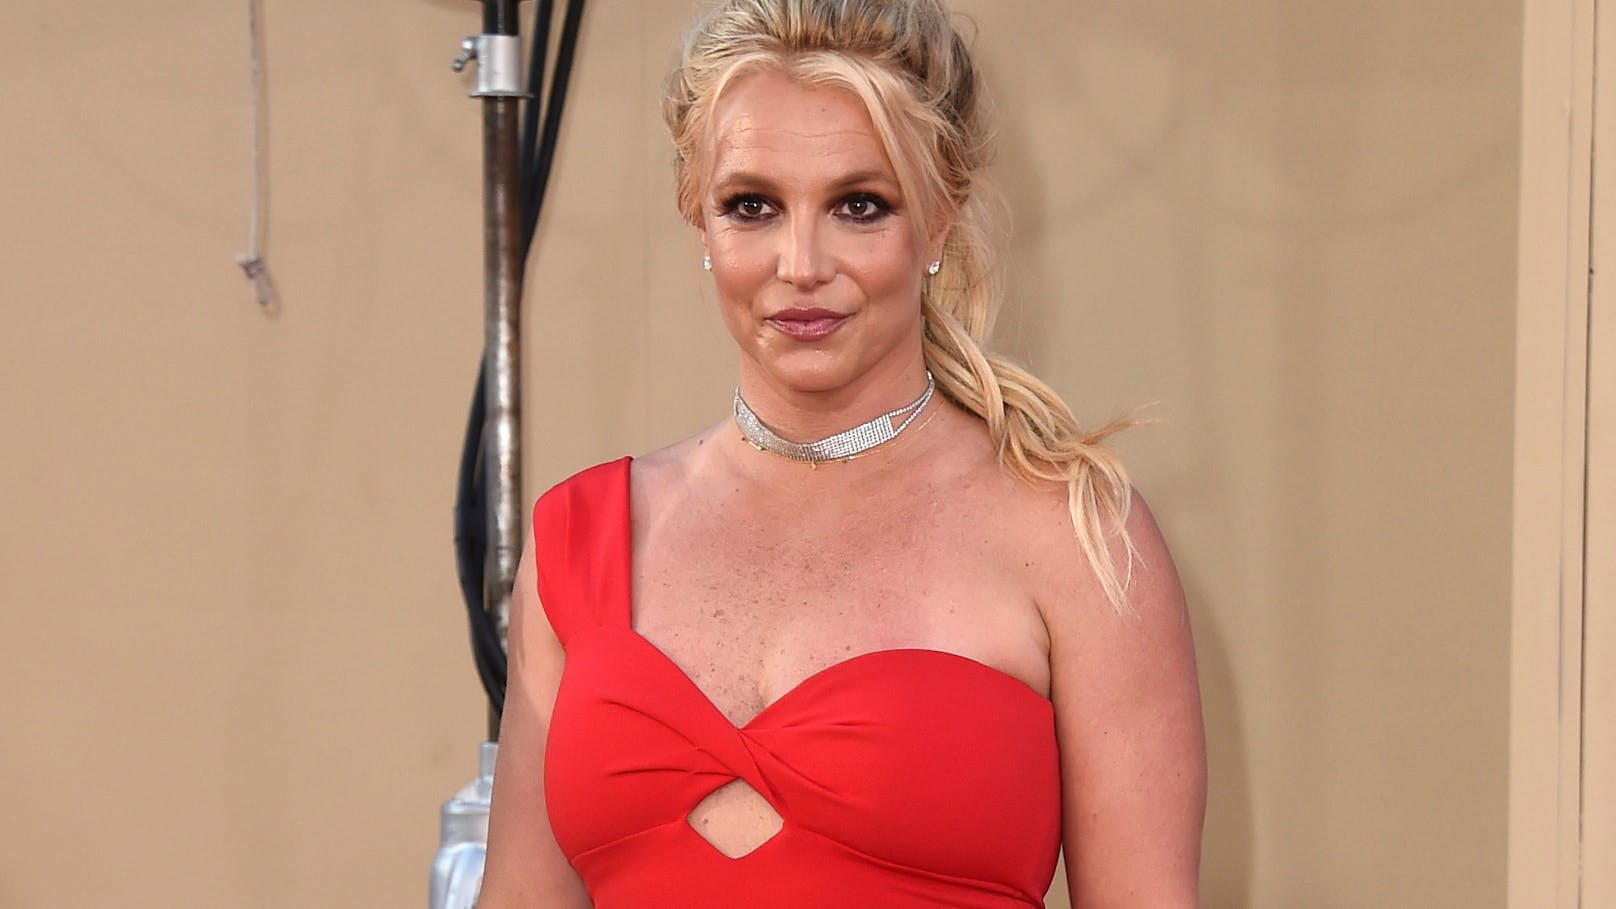 Pop-Sängerin Britney Spears